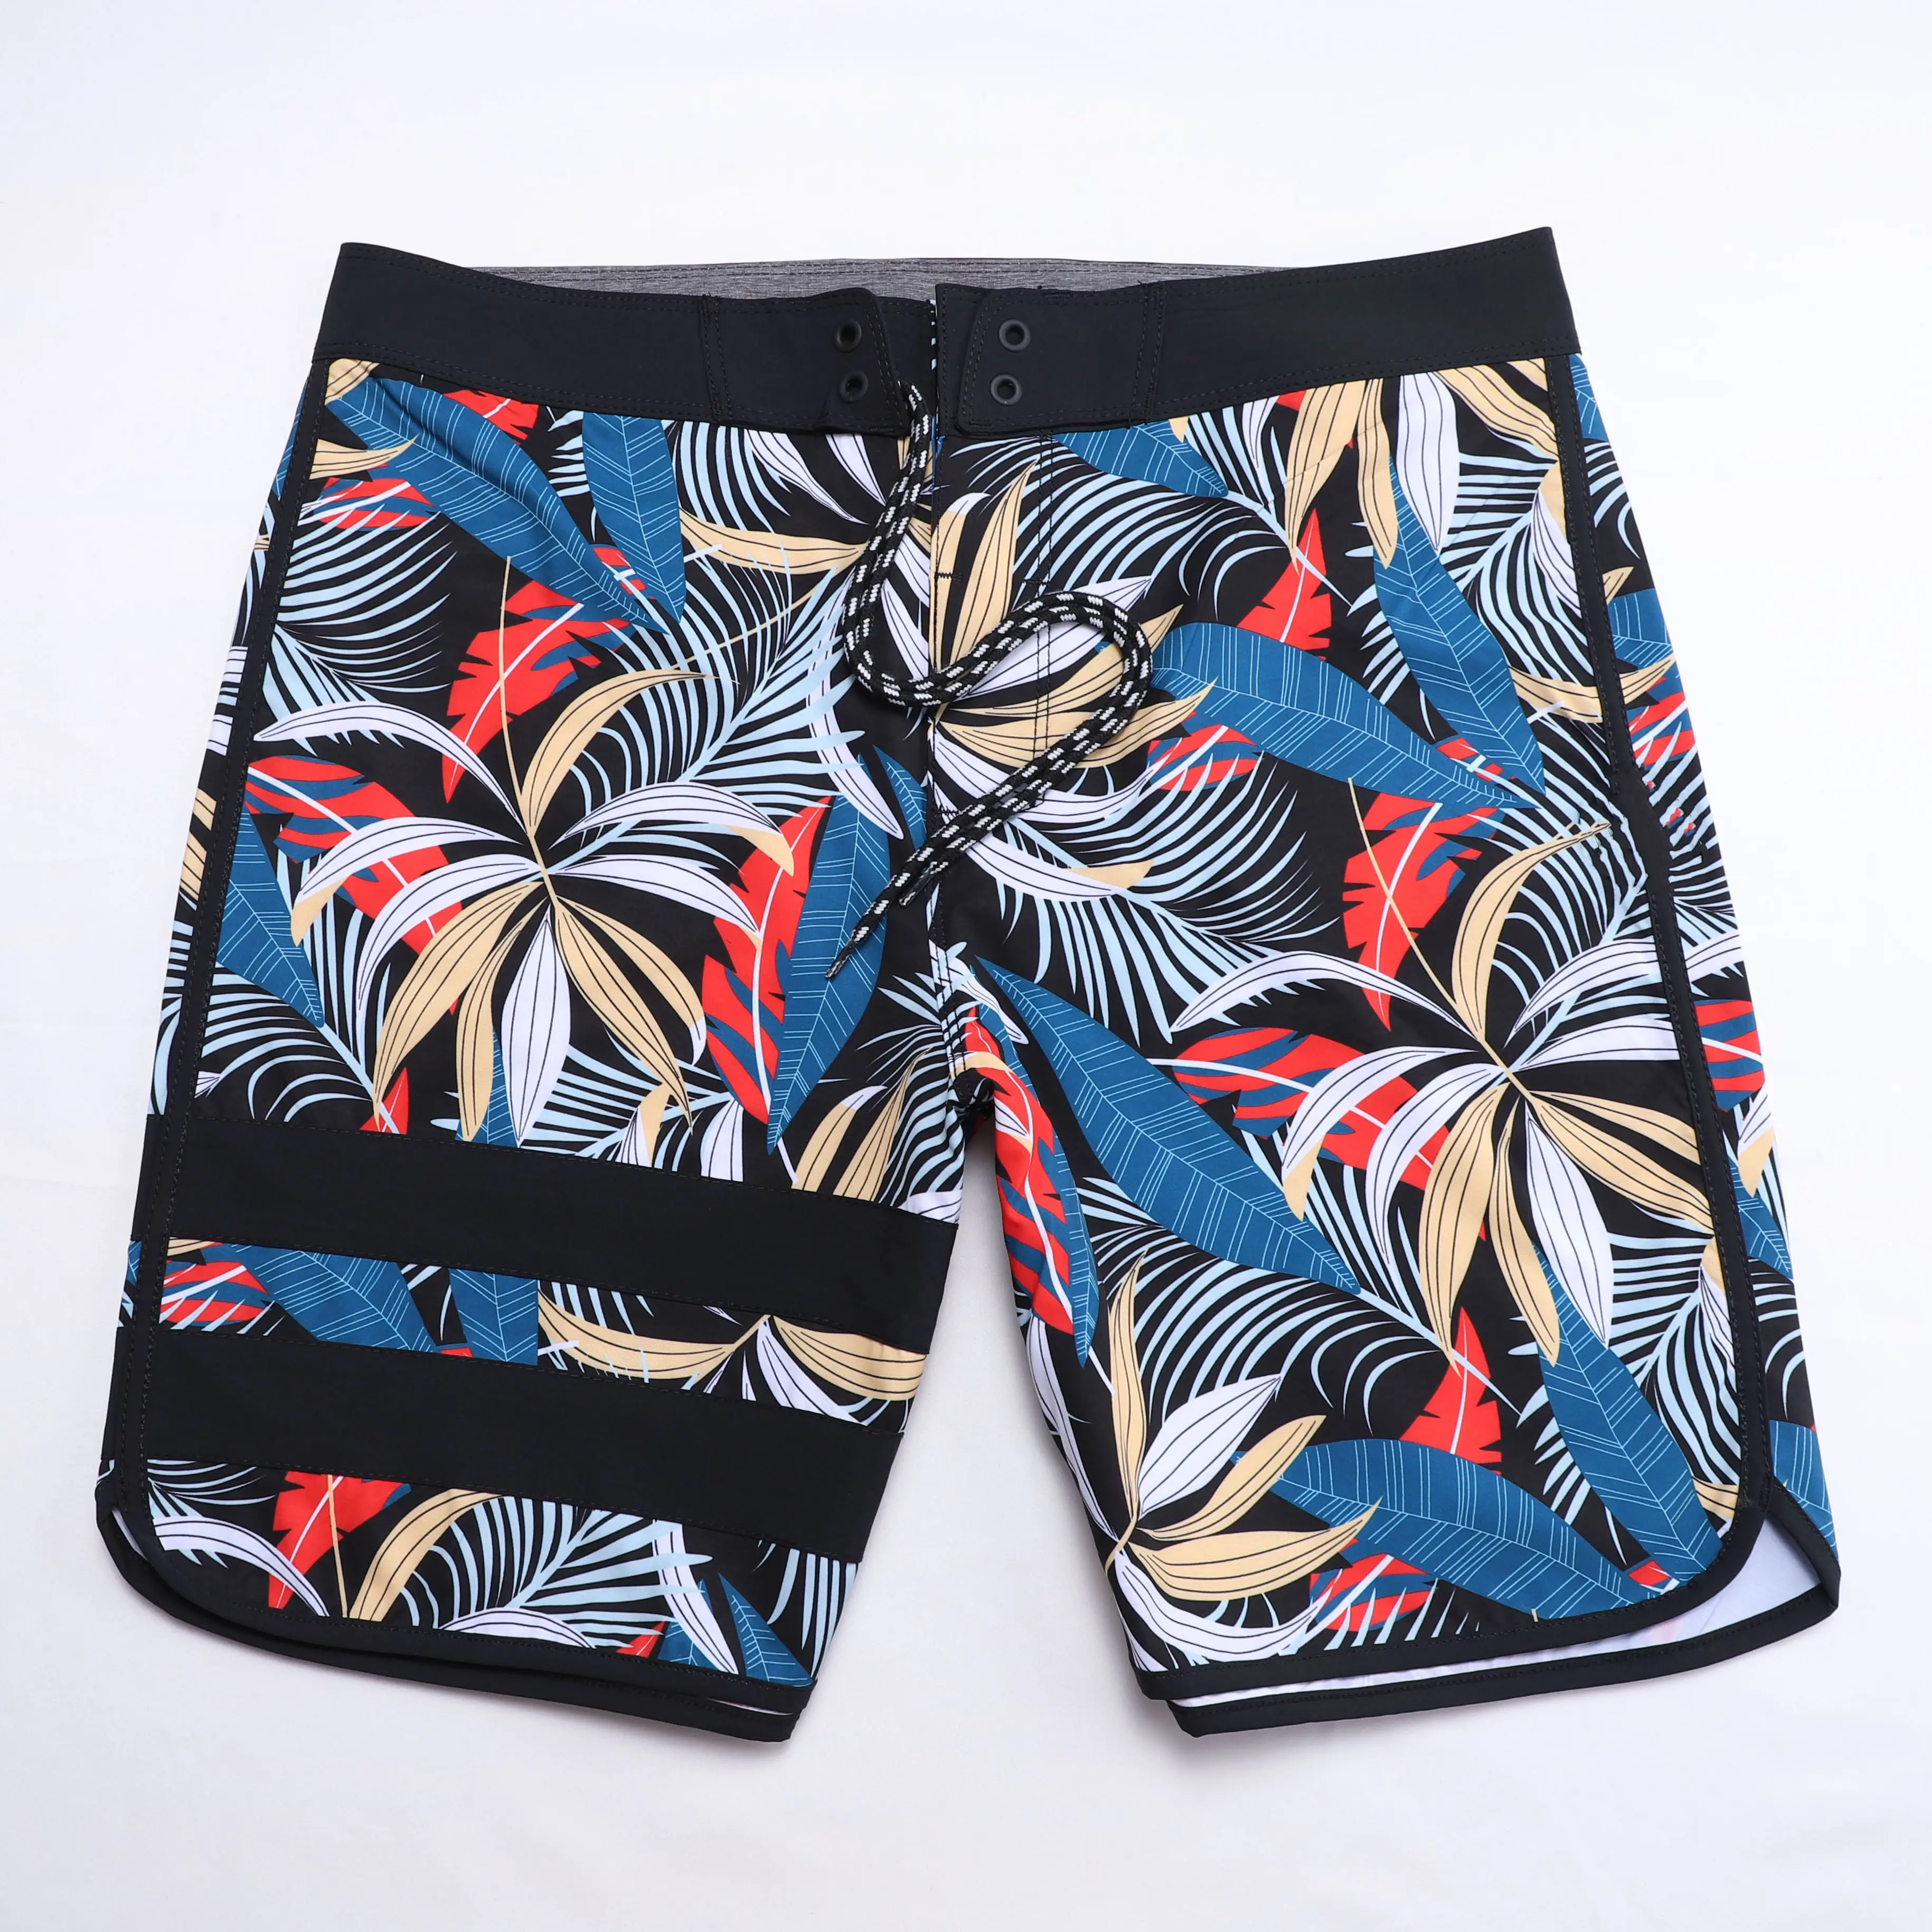 Fashion New Design Men's Beach Shorts Swimwear Board Short Surf Beach with Pockets Fashion Swim Trunks